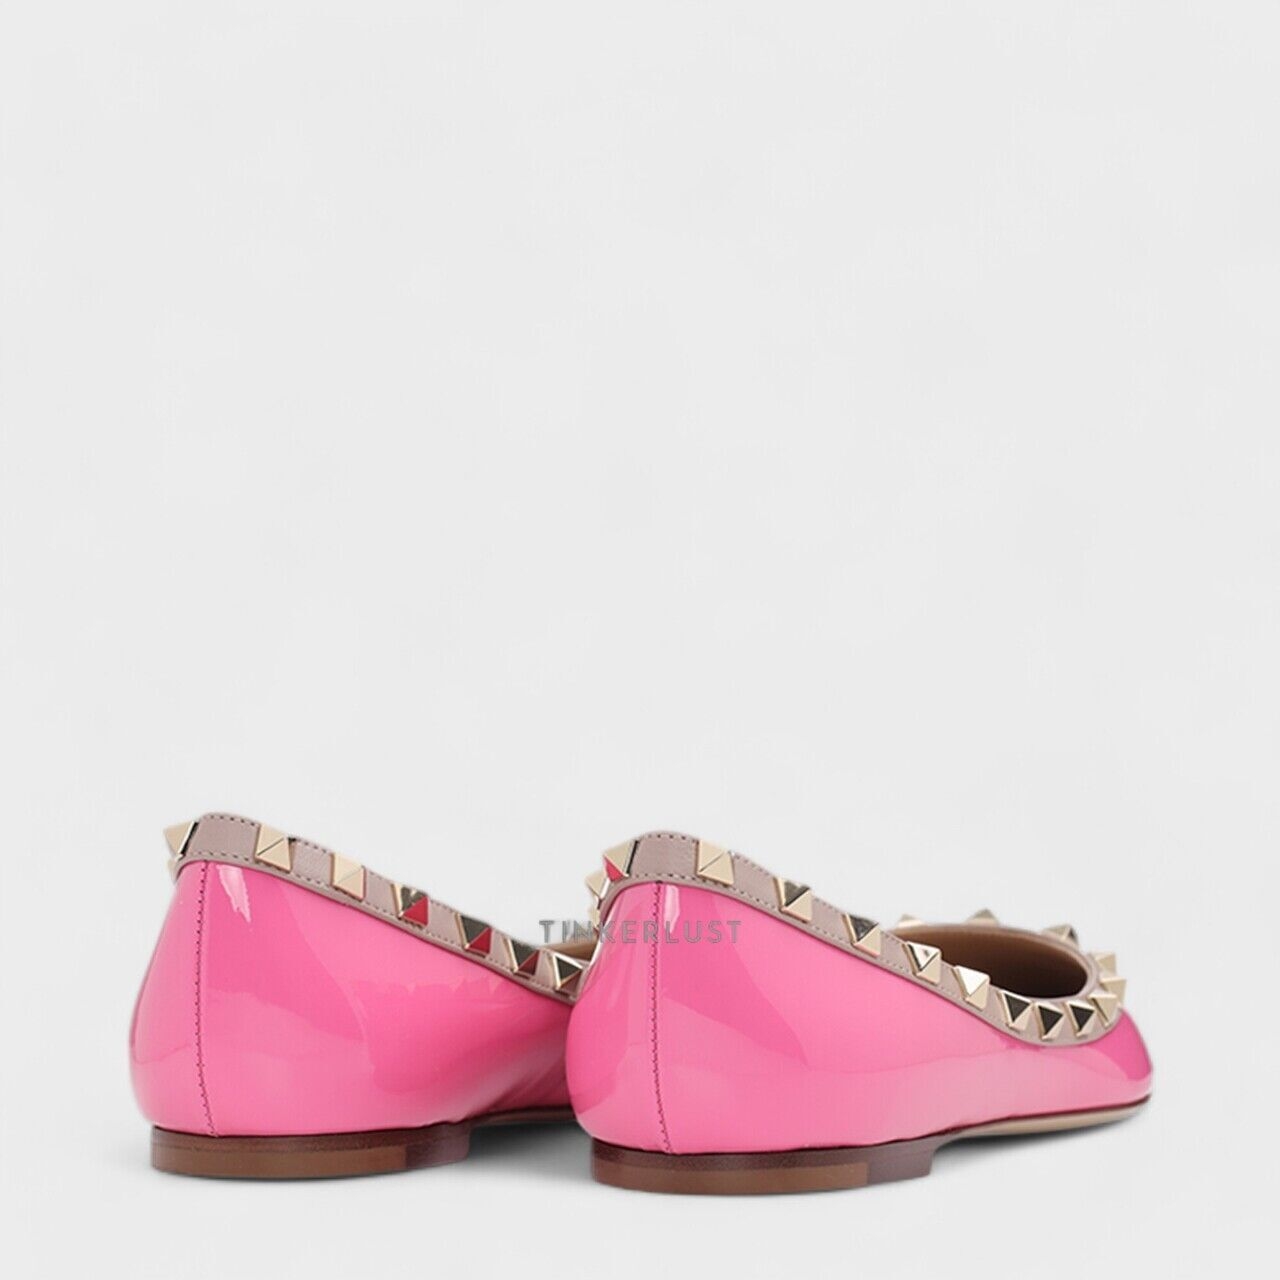 Valentino Garavani Rockstud Ballerina Feminine Pink Patent Leather Flats